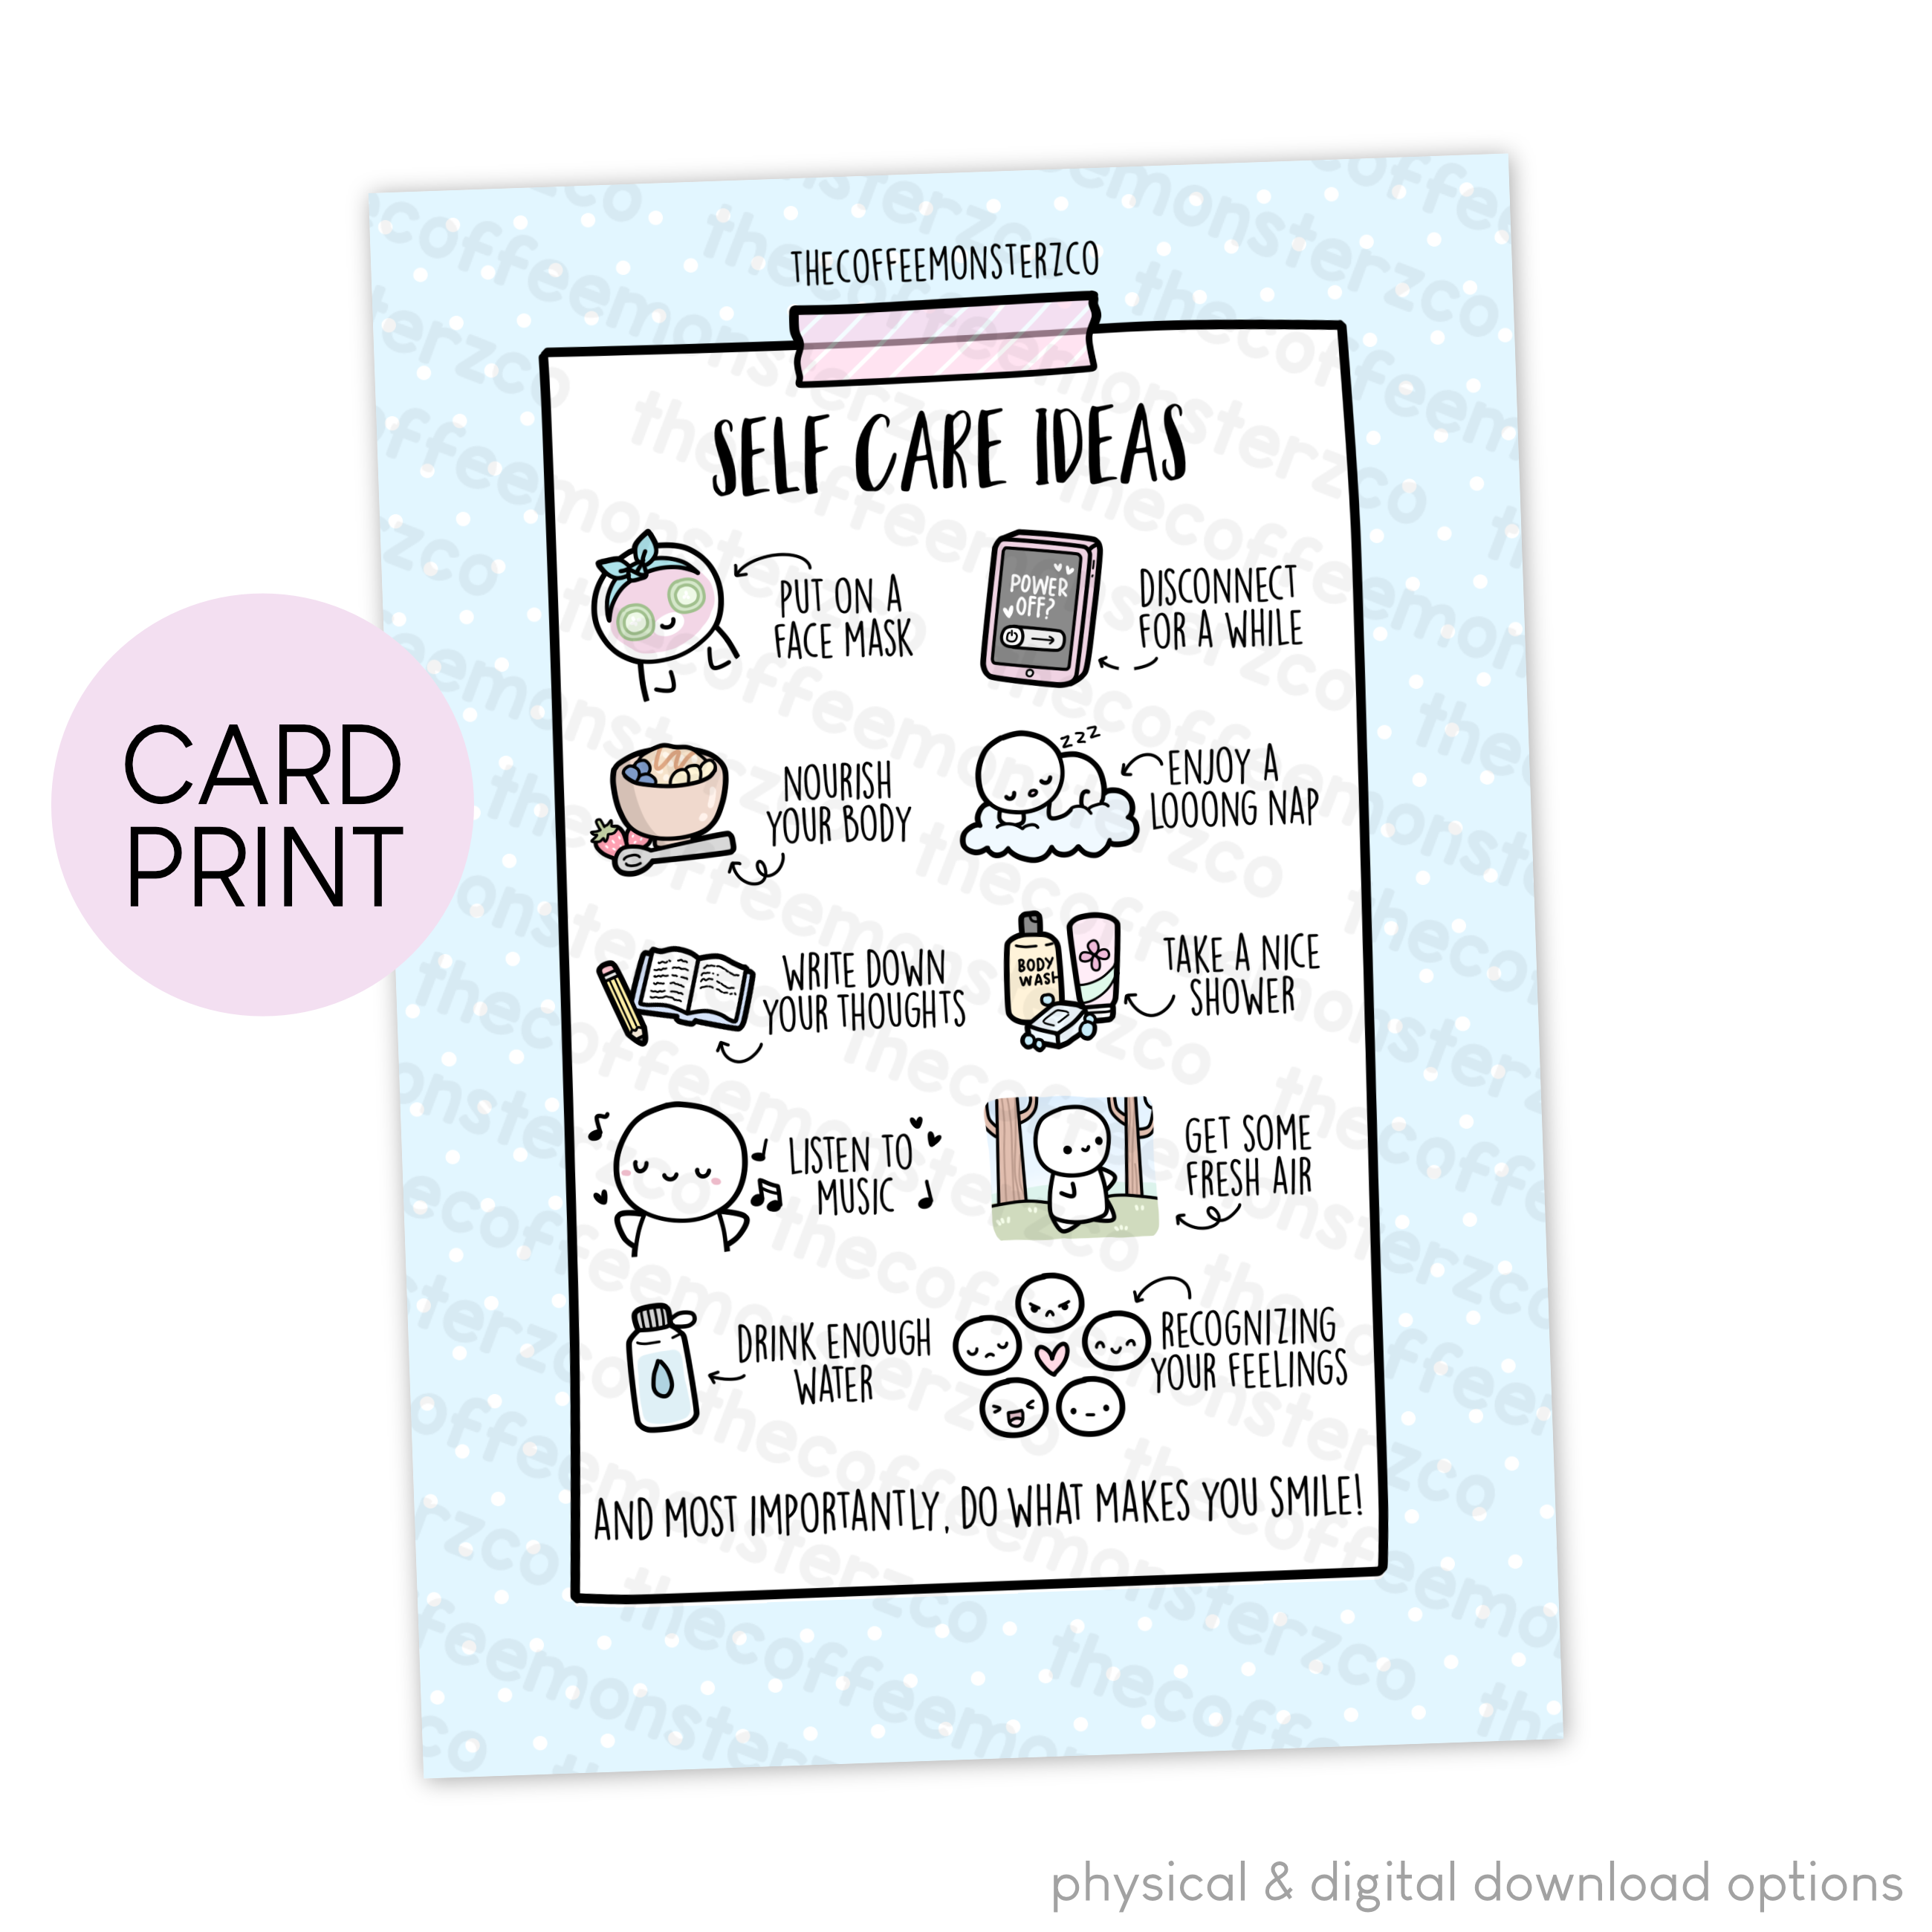 Self Care Ideas - Card Print